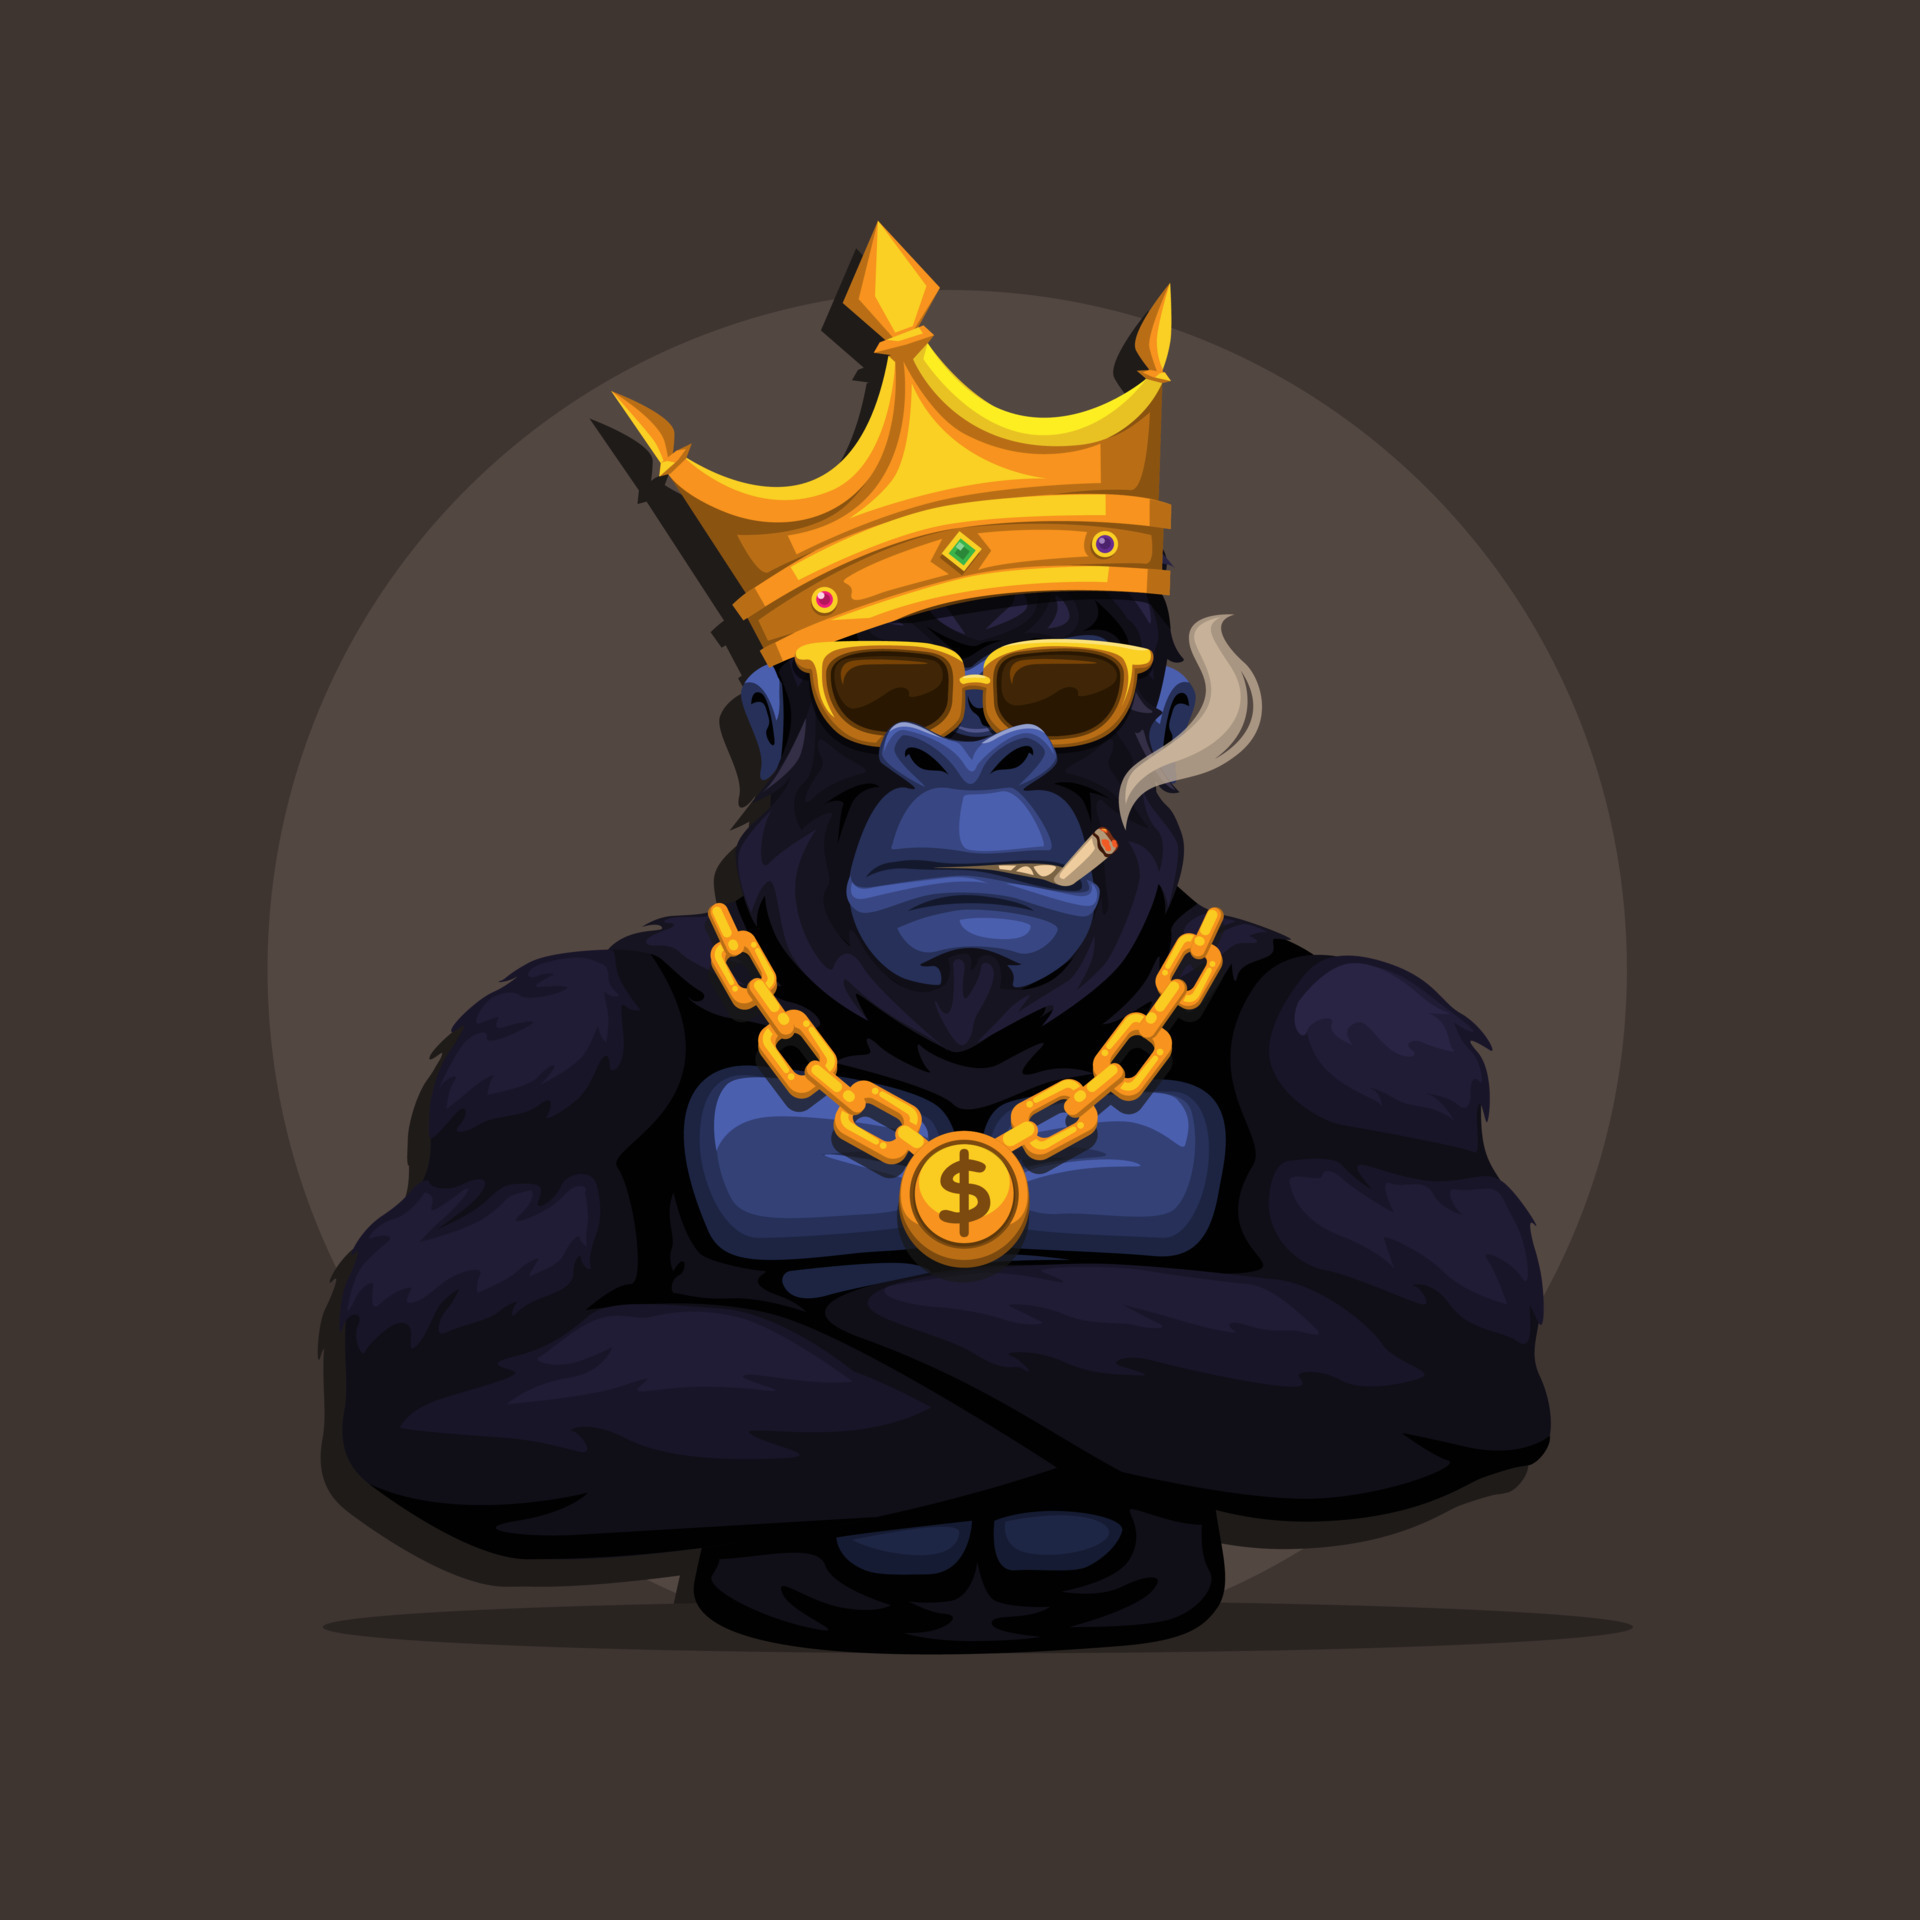 Gorilla king kong monkey wear crown and smoking mascot symbol cartoon  illustration vector 4596331 Vector Art at Vecteezy